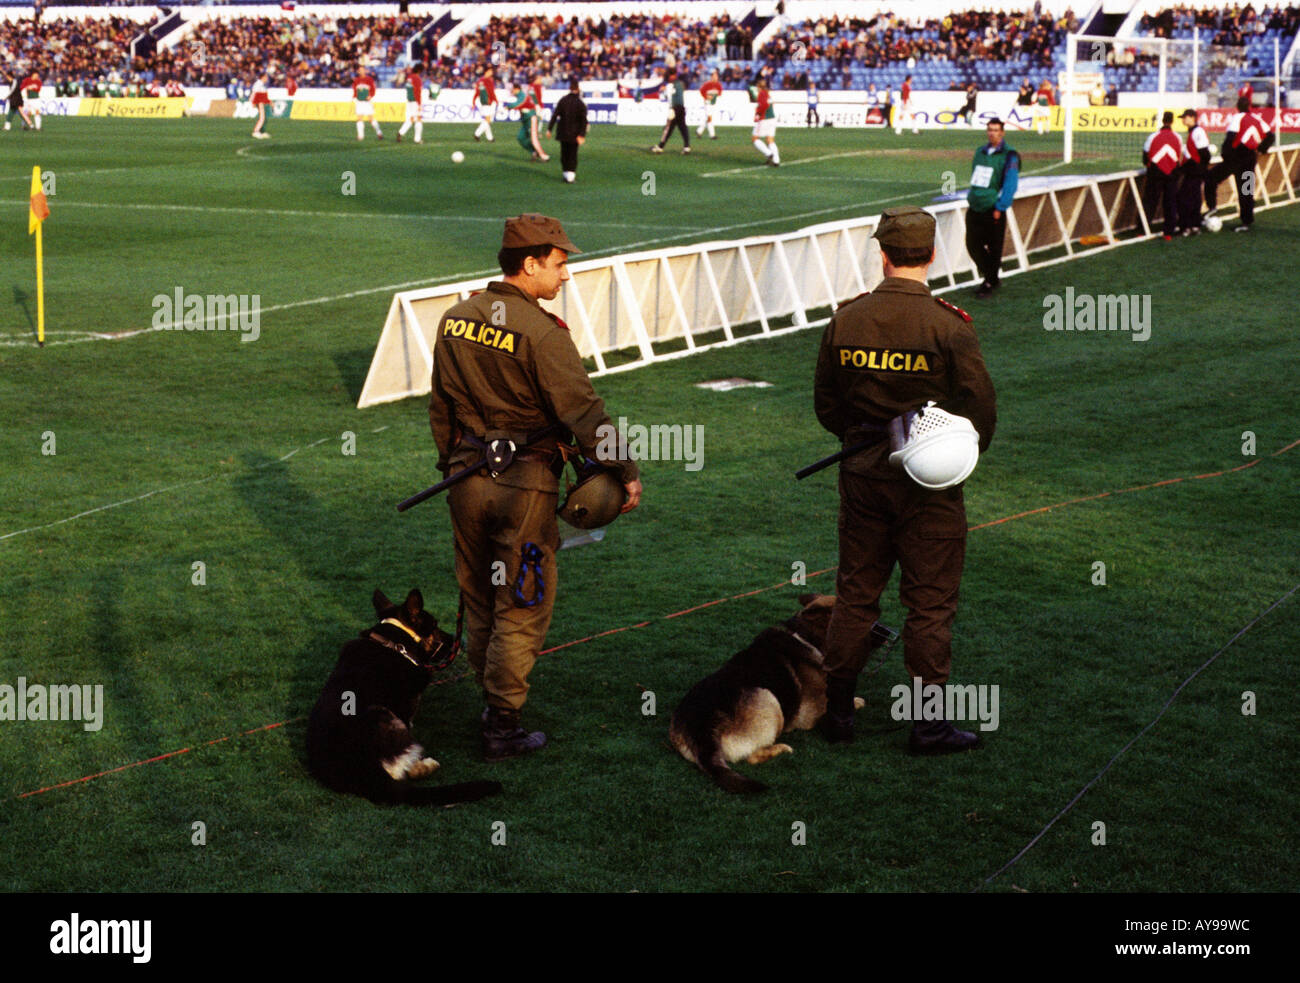 Policemen at an International football match between Slovakia and Hungary at Tehelne Pole Stadium, Bratislava. Stock Photo